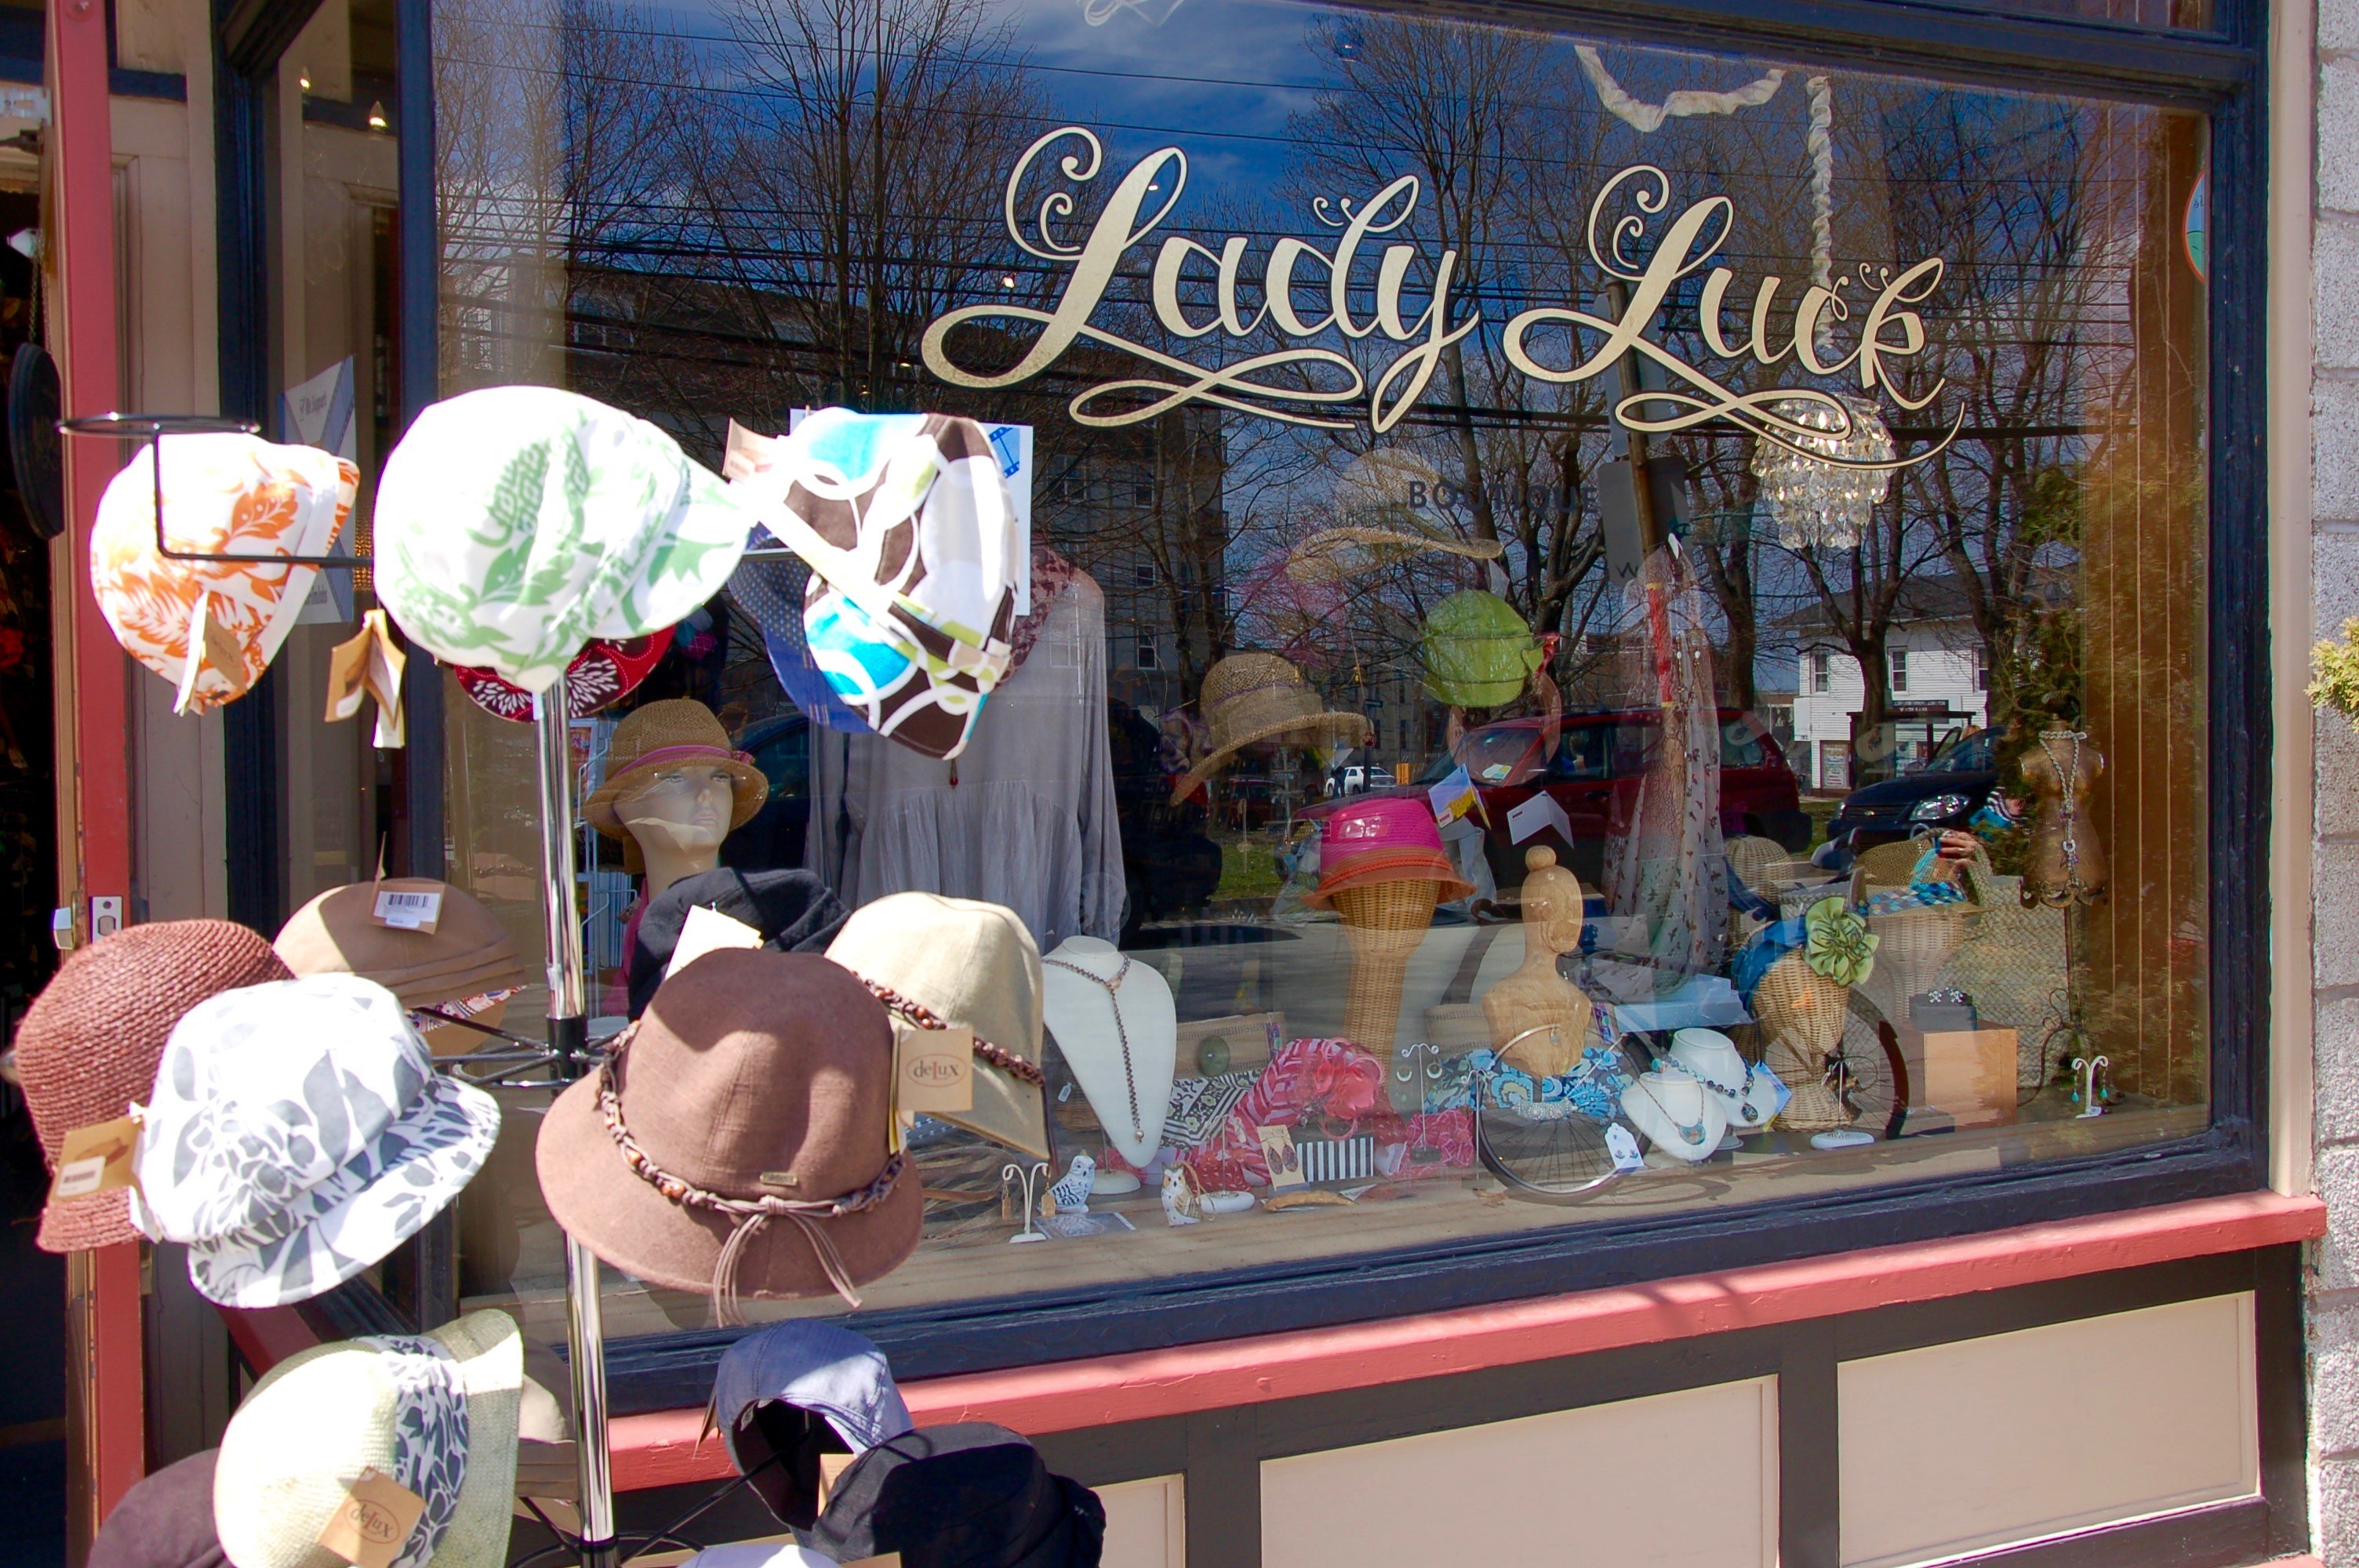 Portland Street gets Lady Luck